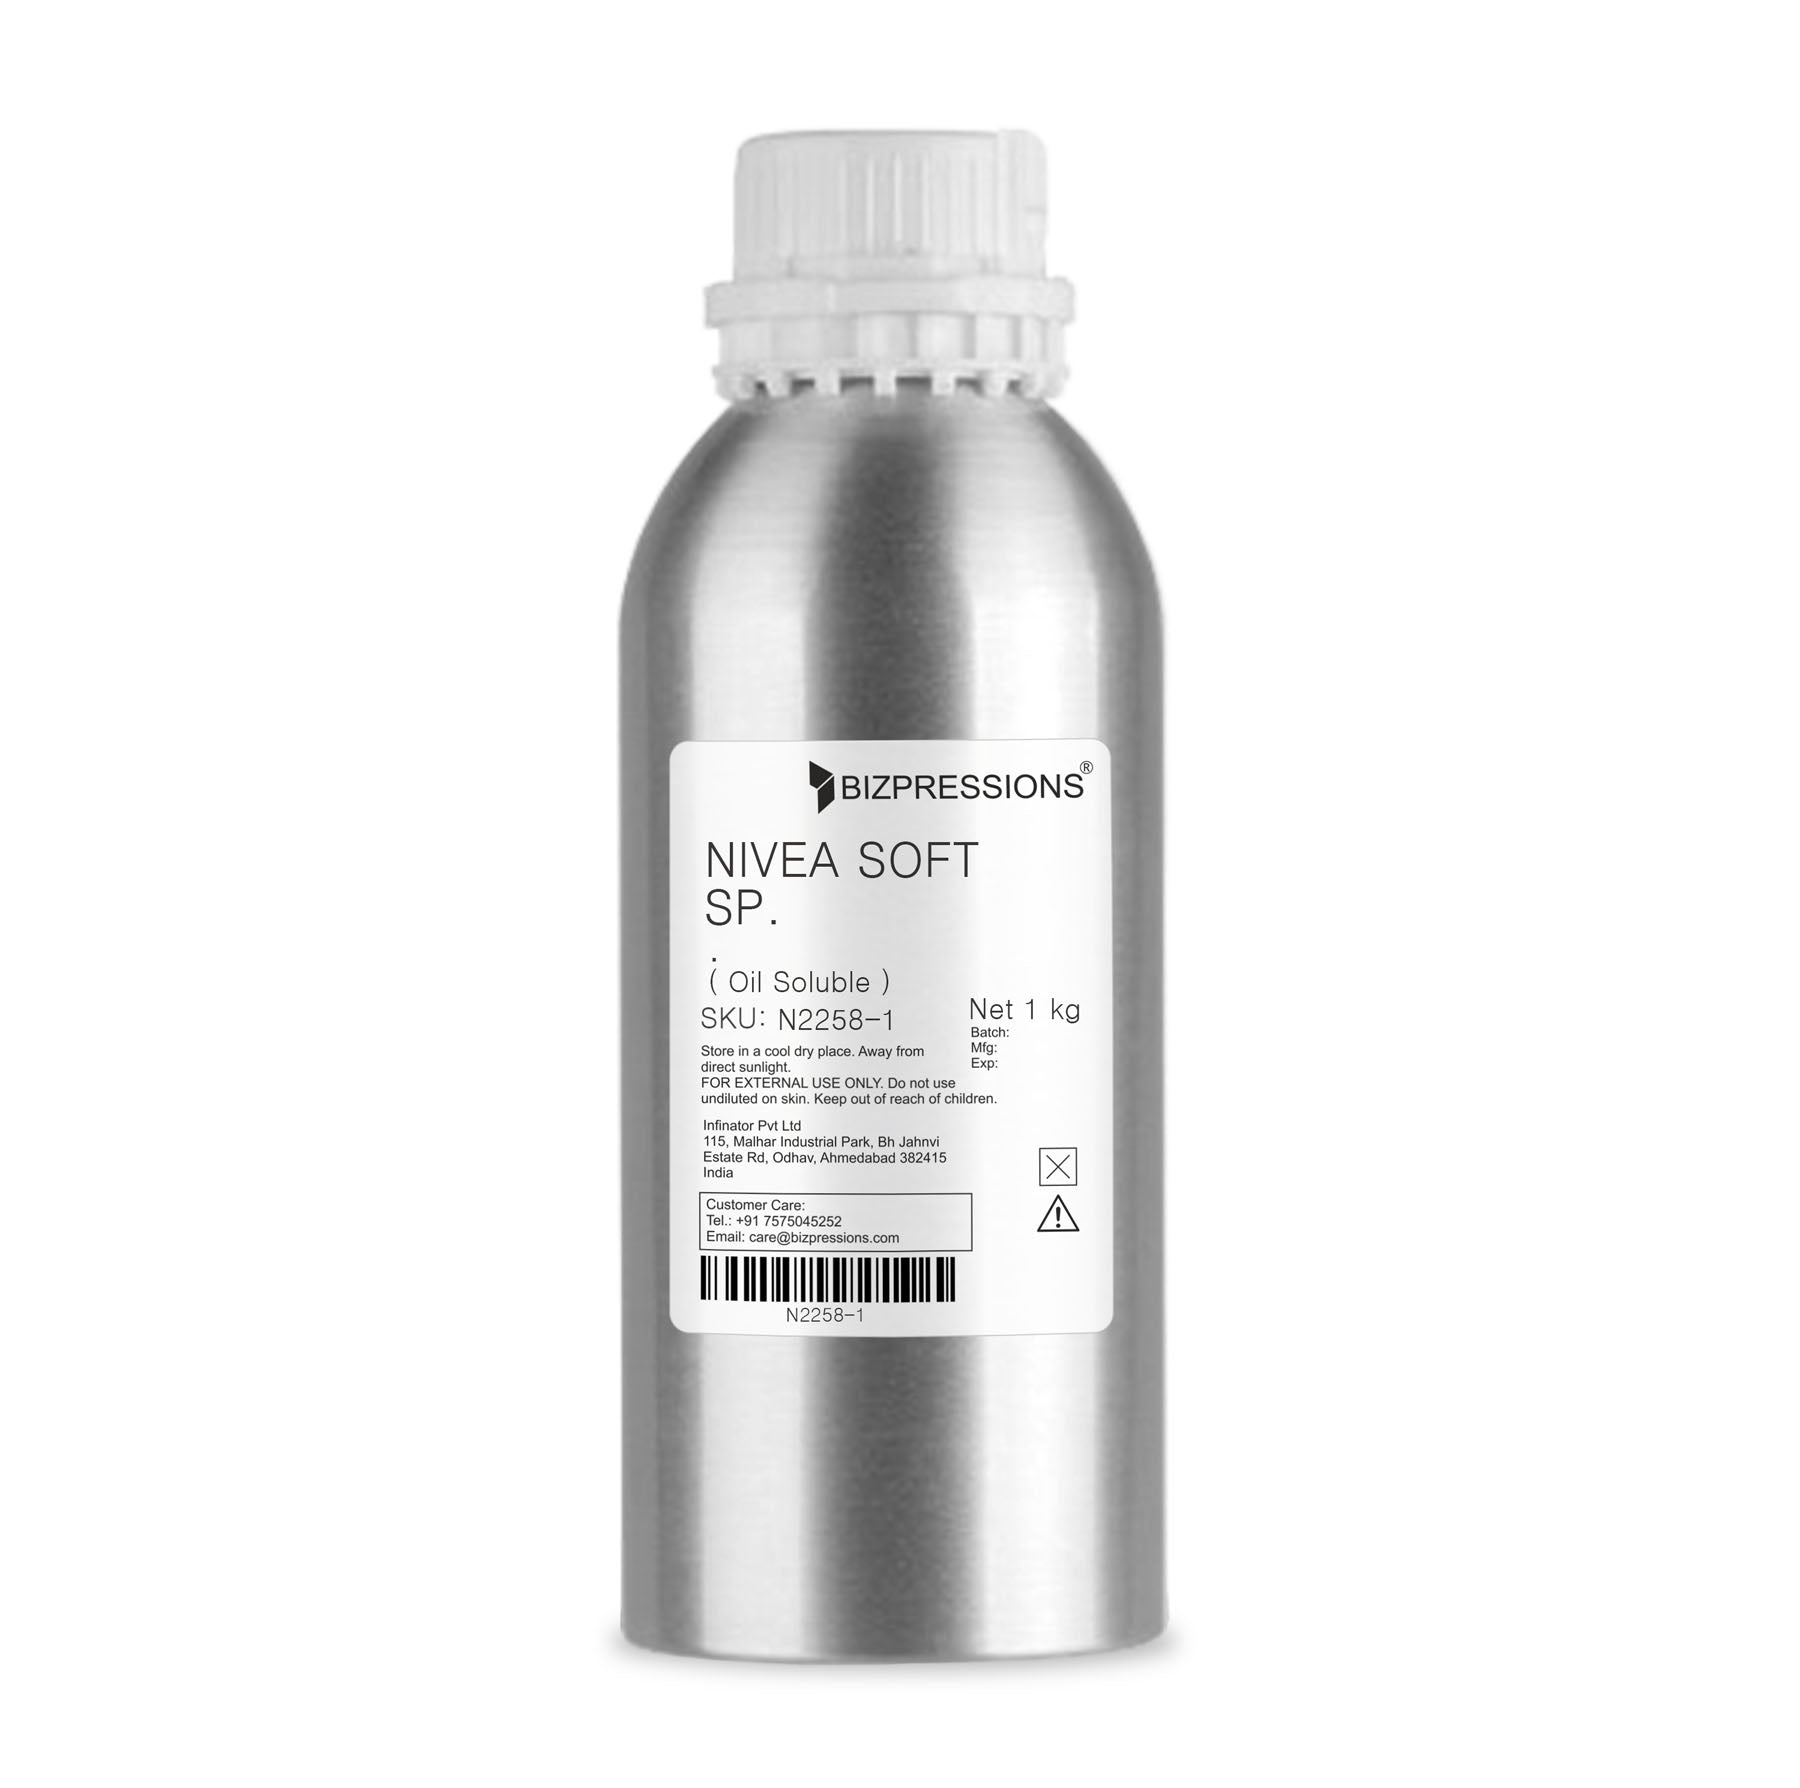 NIVEA SOFT SP. - Fragrance ( Oil Soluble )